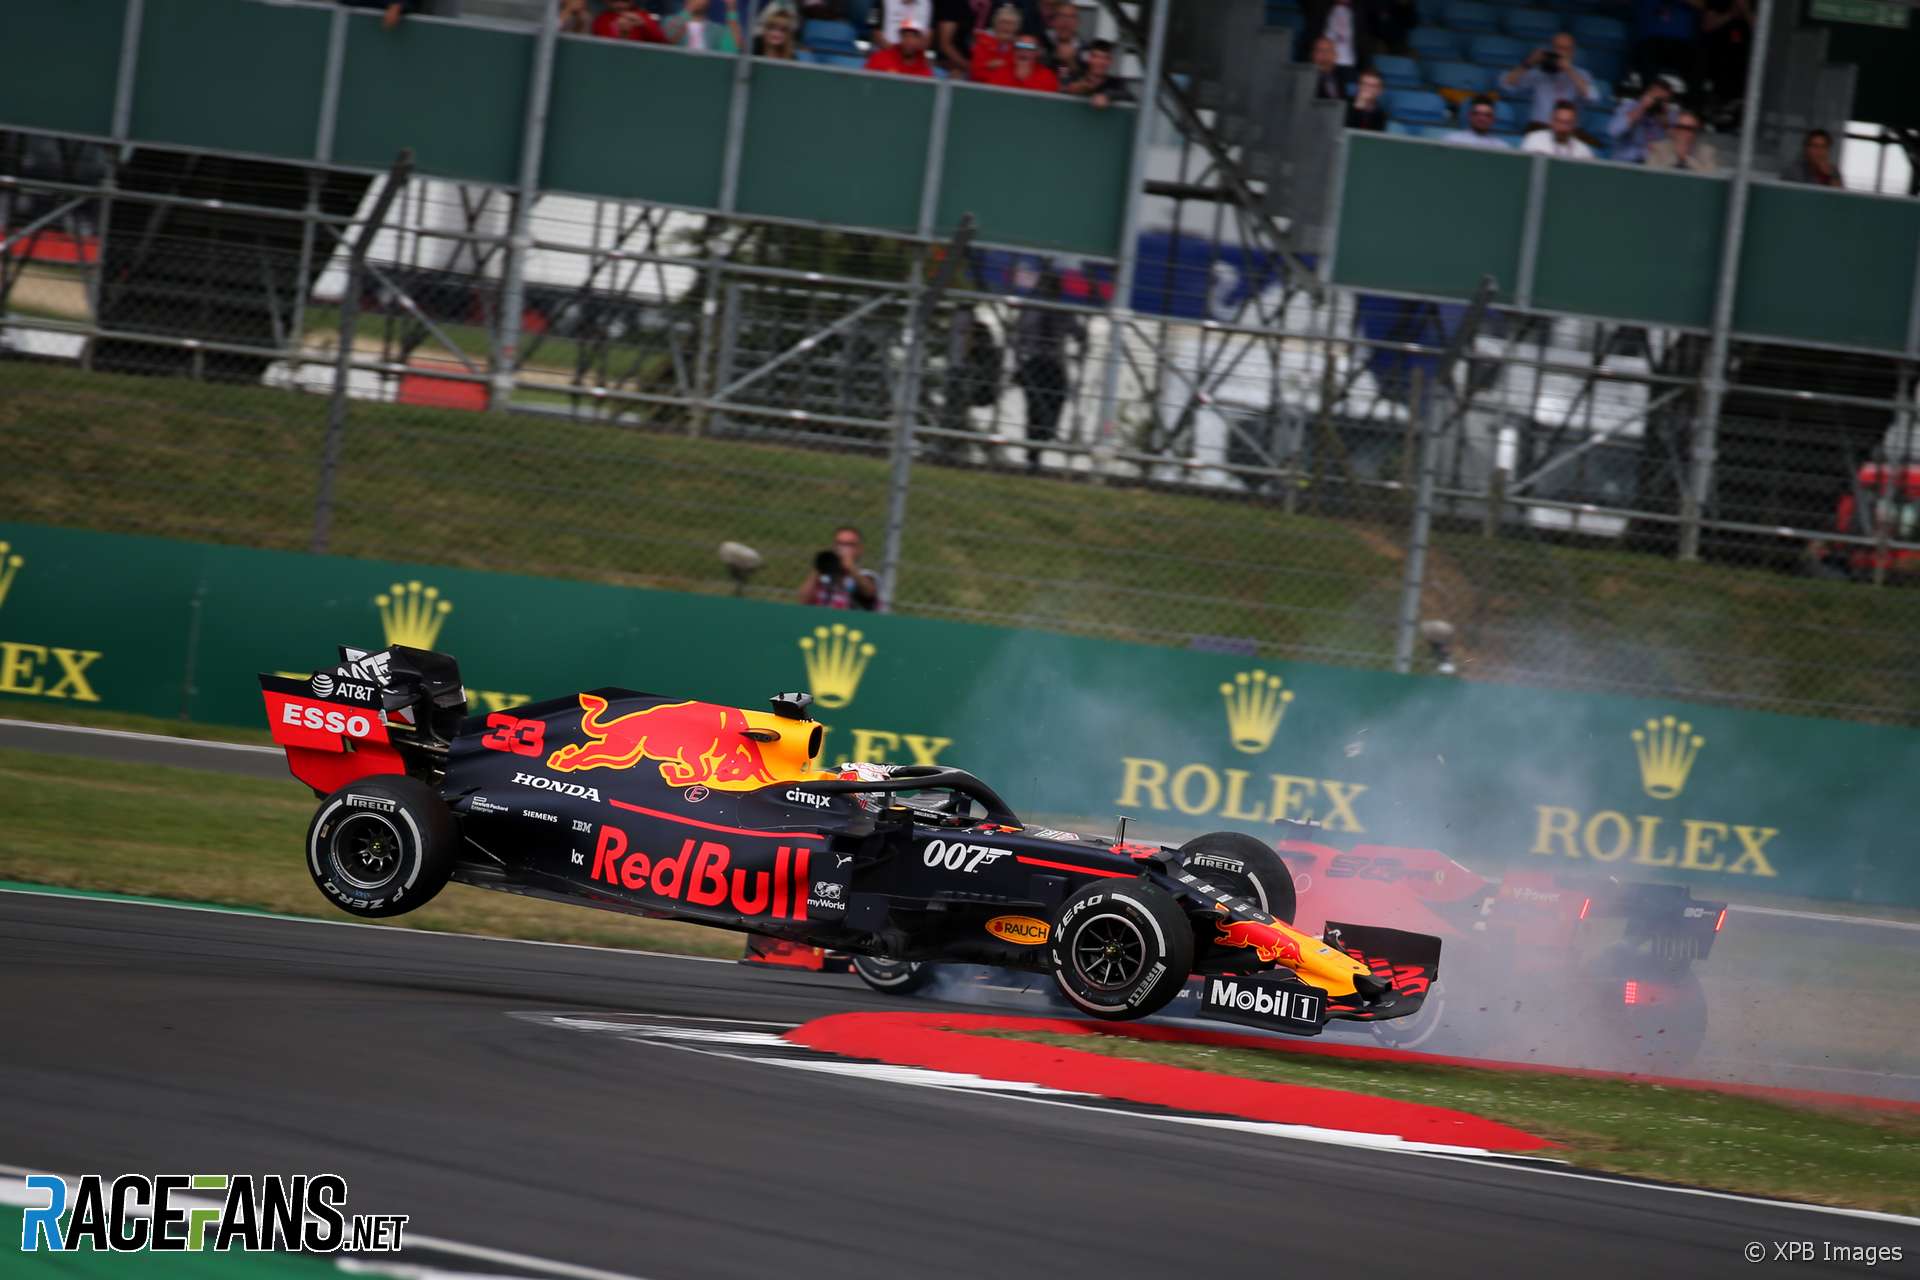 Vettel cost Verstappen a potential second place – Horner